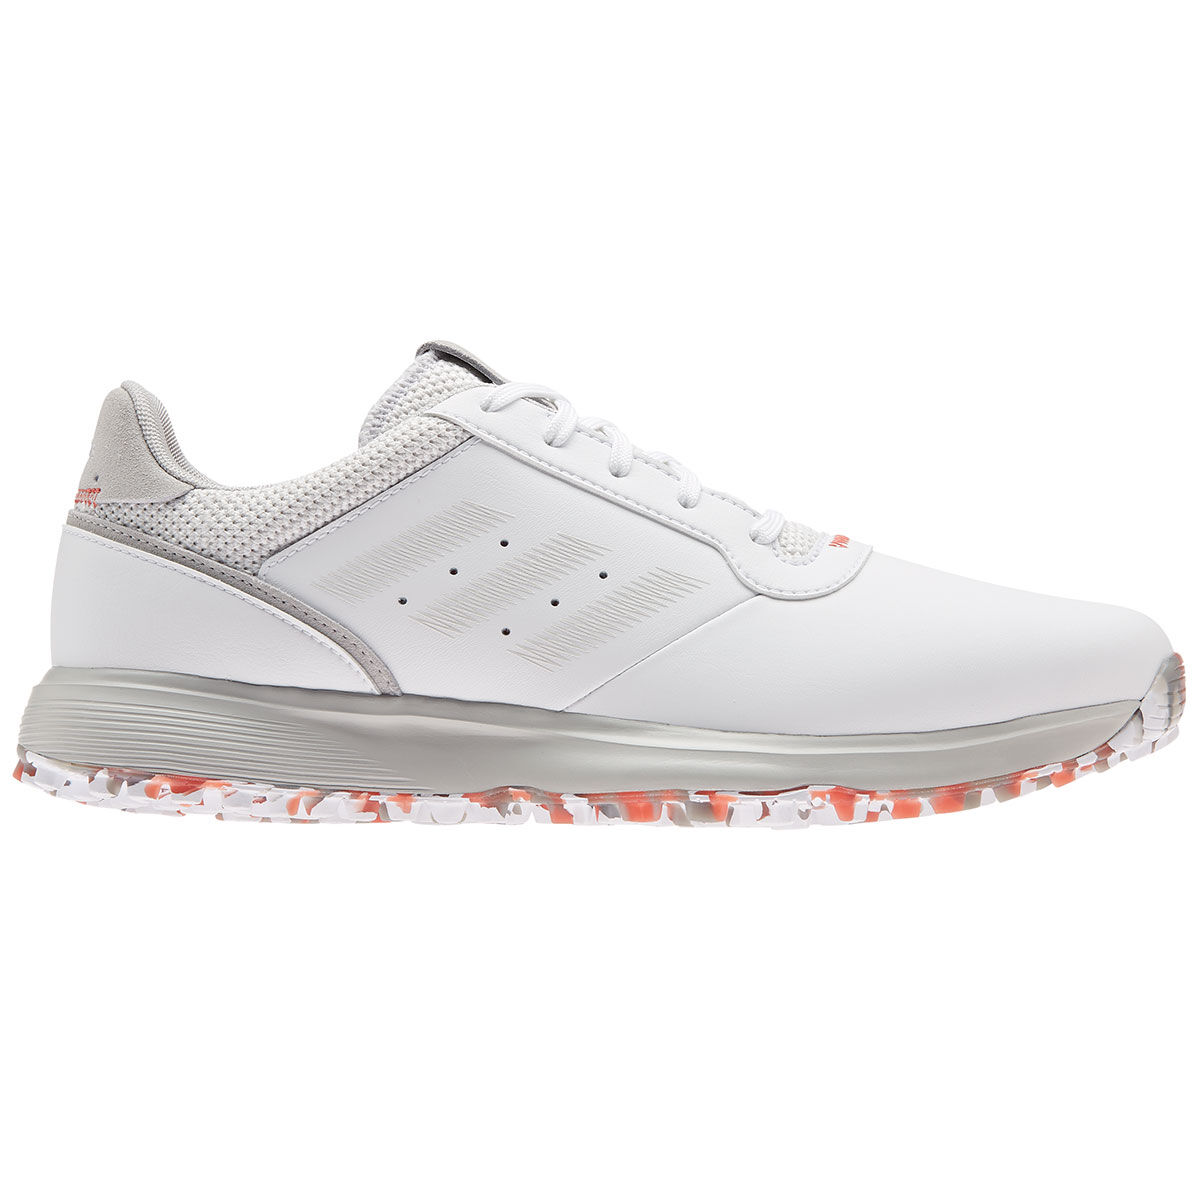 Chaussures adidas Golf S2G Spikeless cuir, homme, 7, Blanc/Gris/Rouge | Online Golf